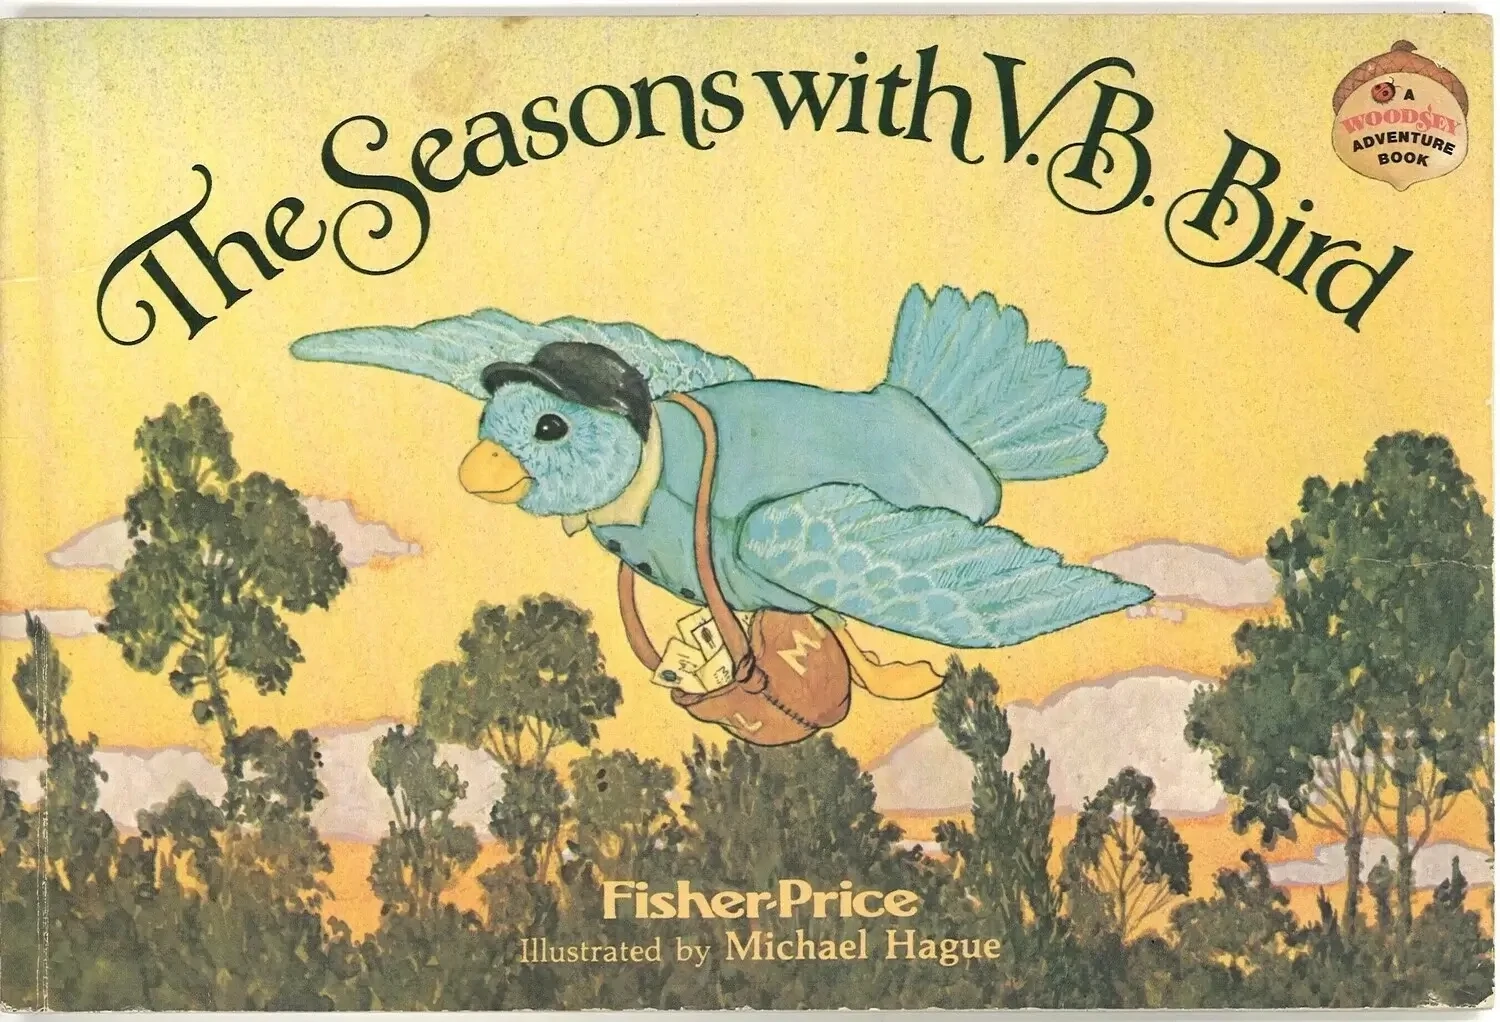 The Seasons with V.B. Bird by Marci Ridlon